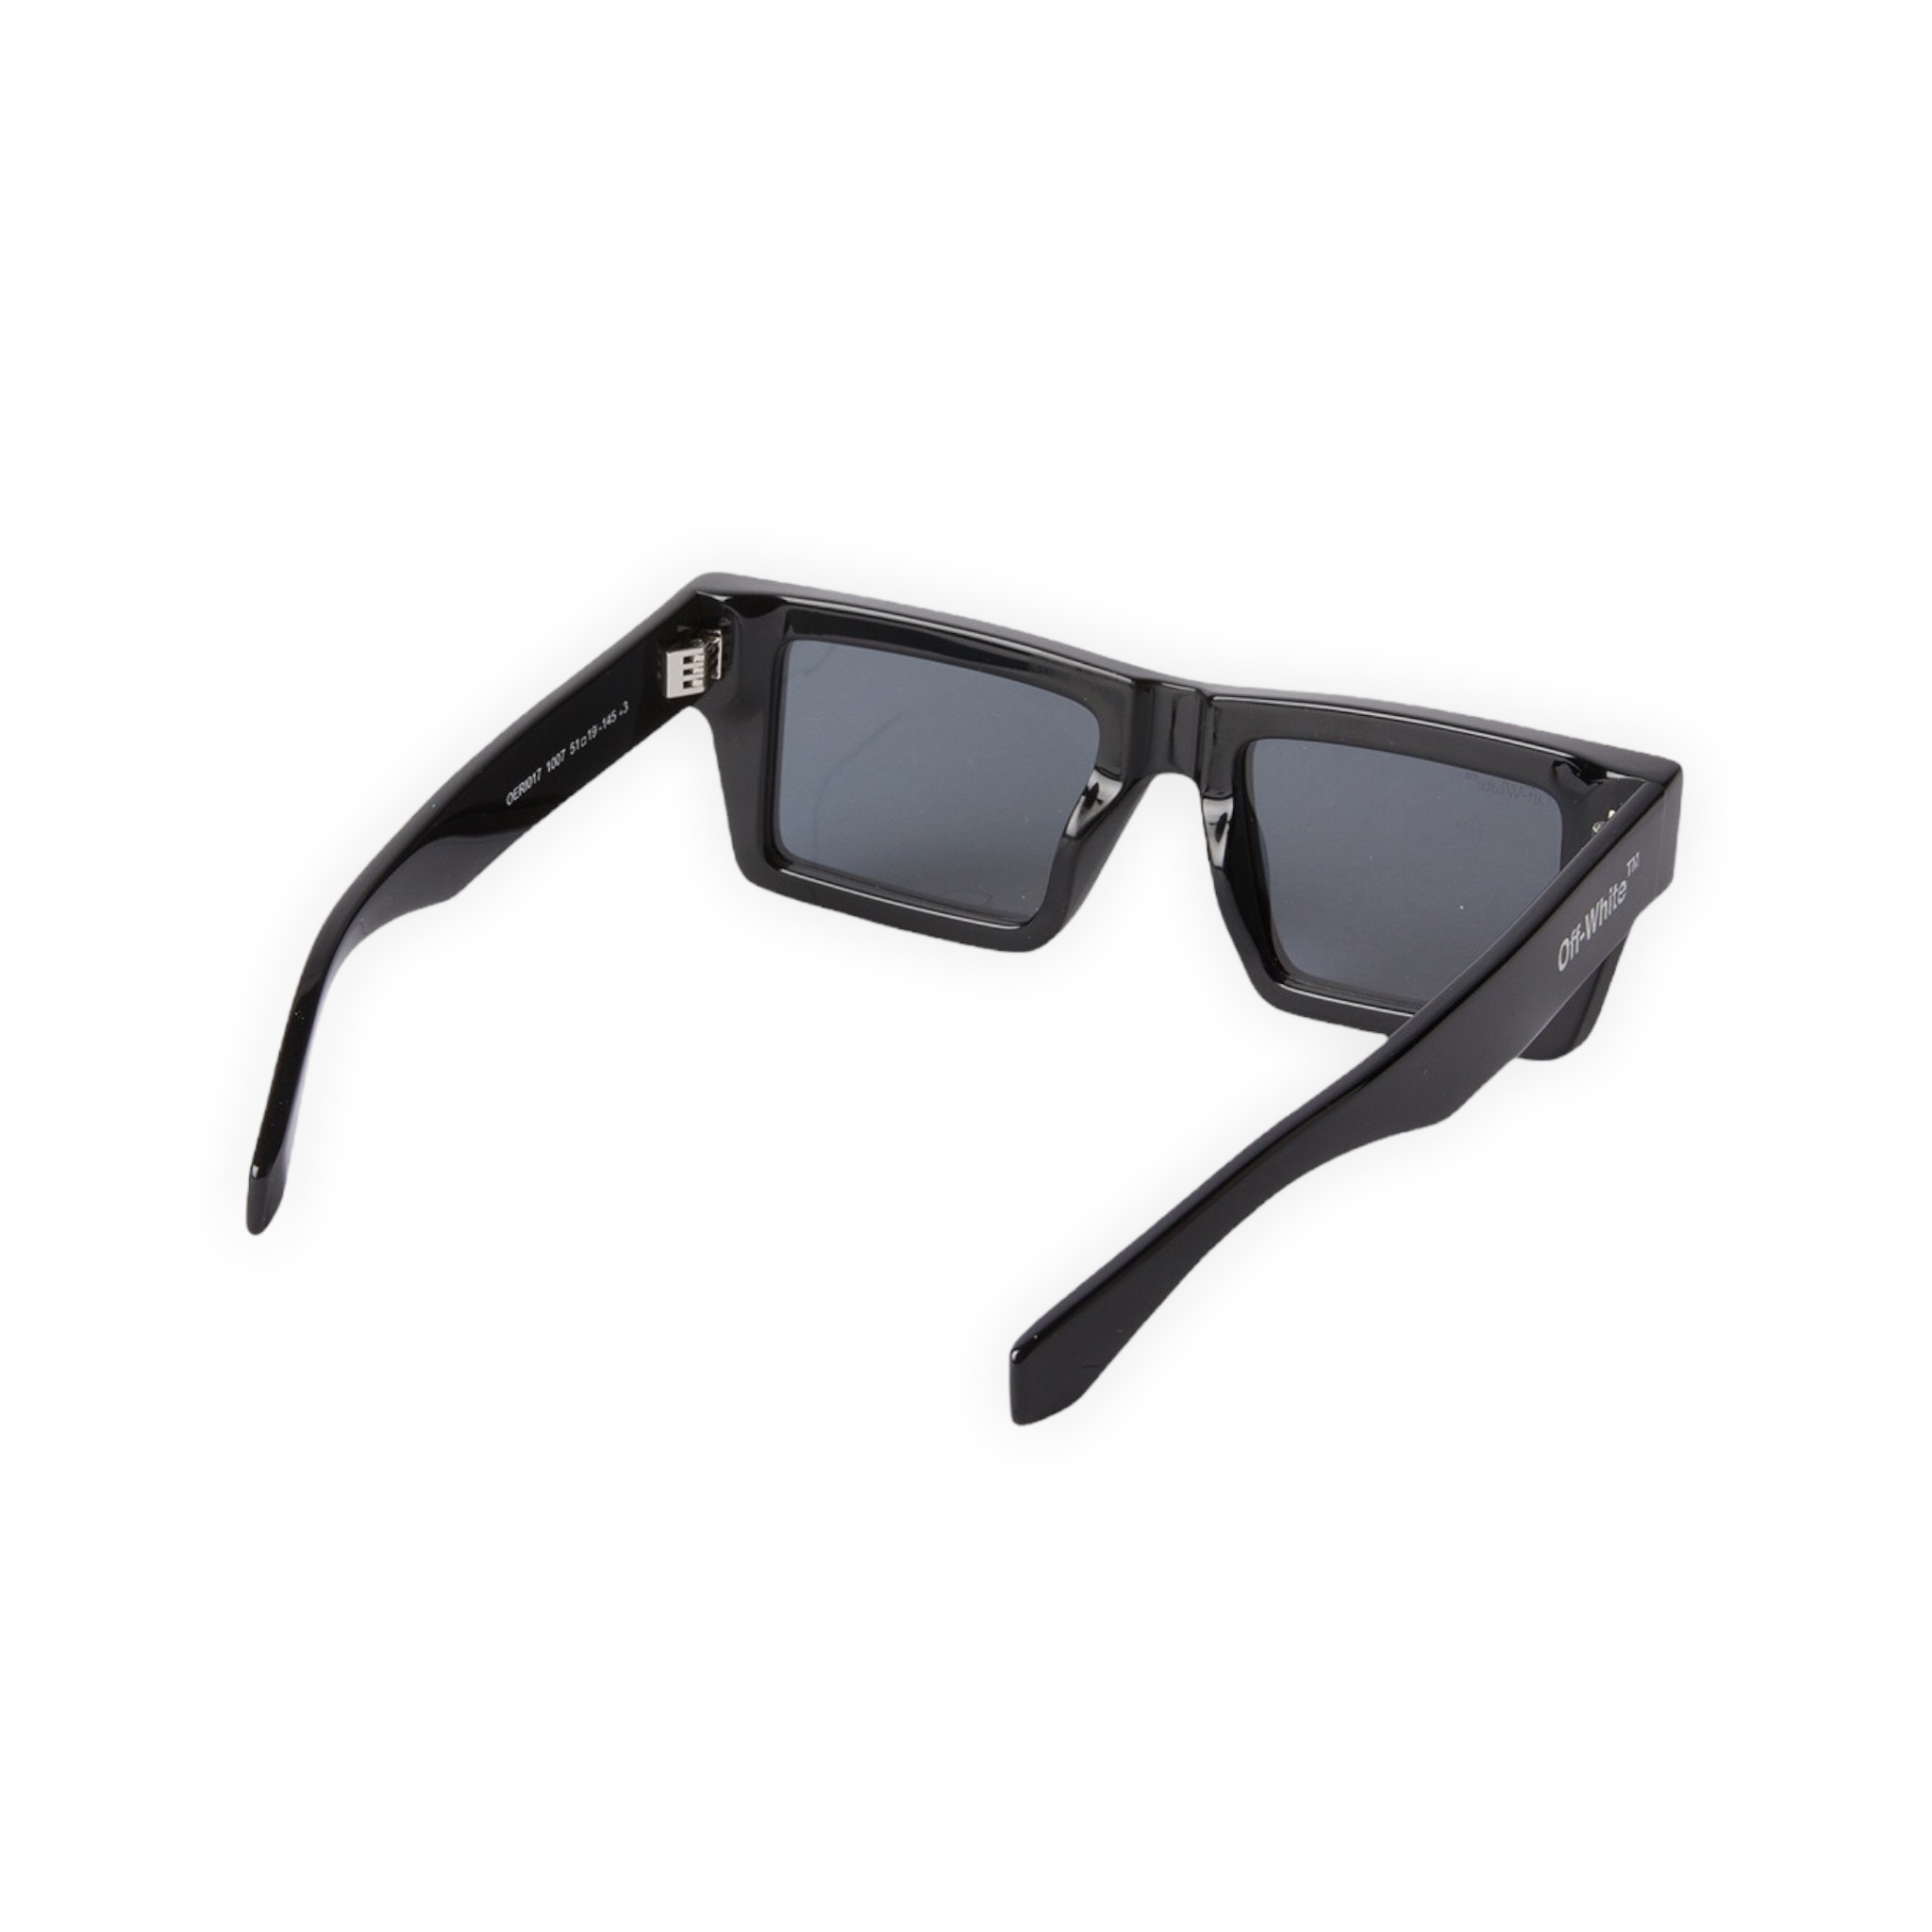 Off white sunglasses - b3 store